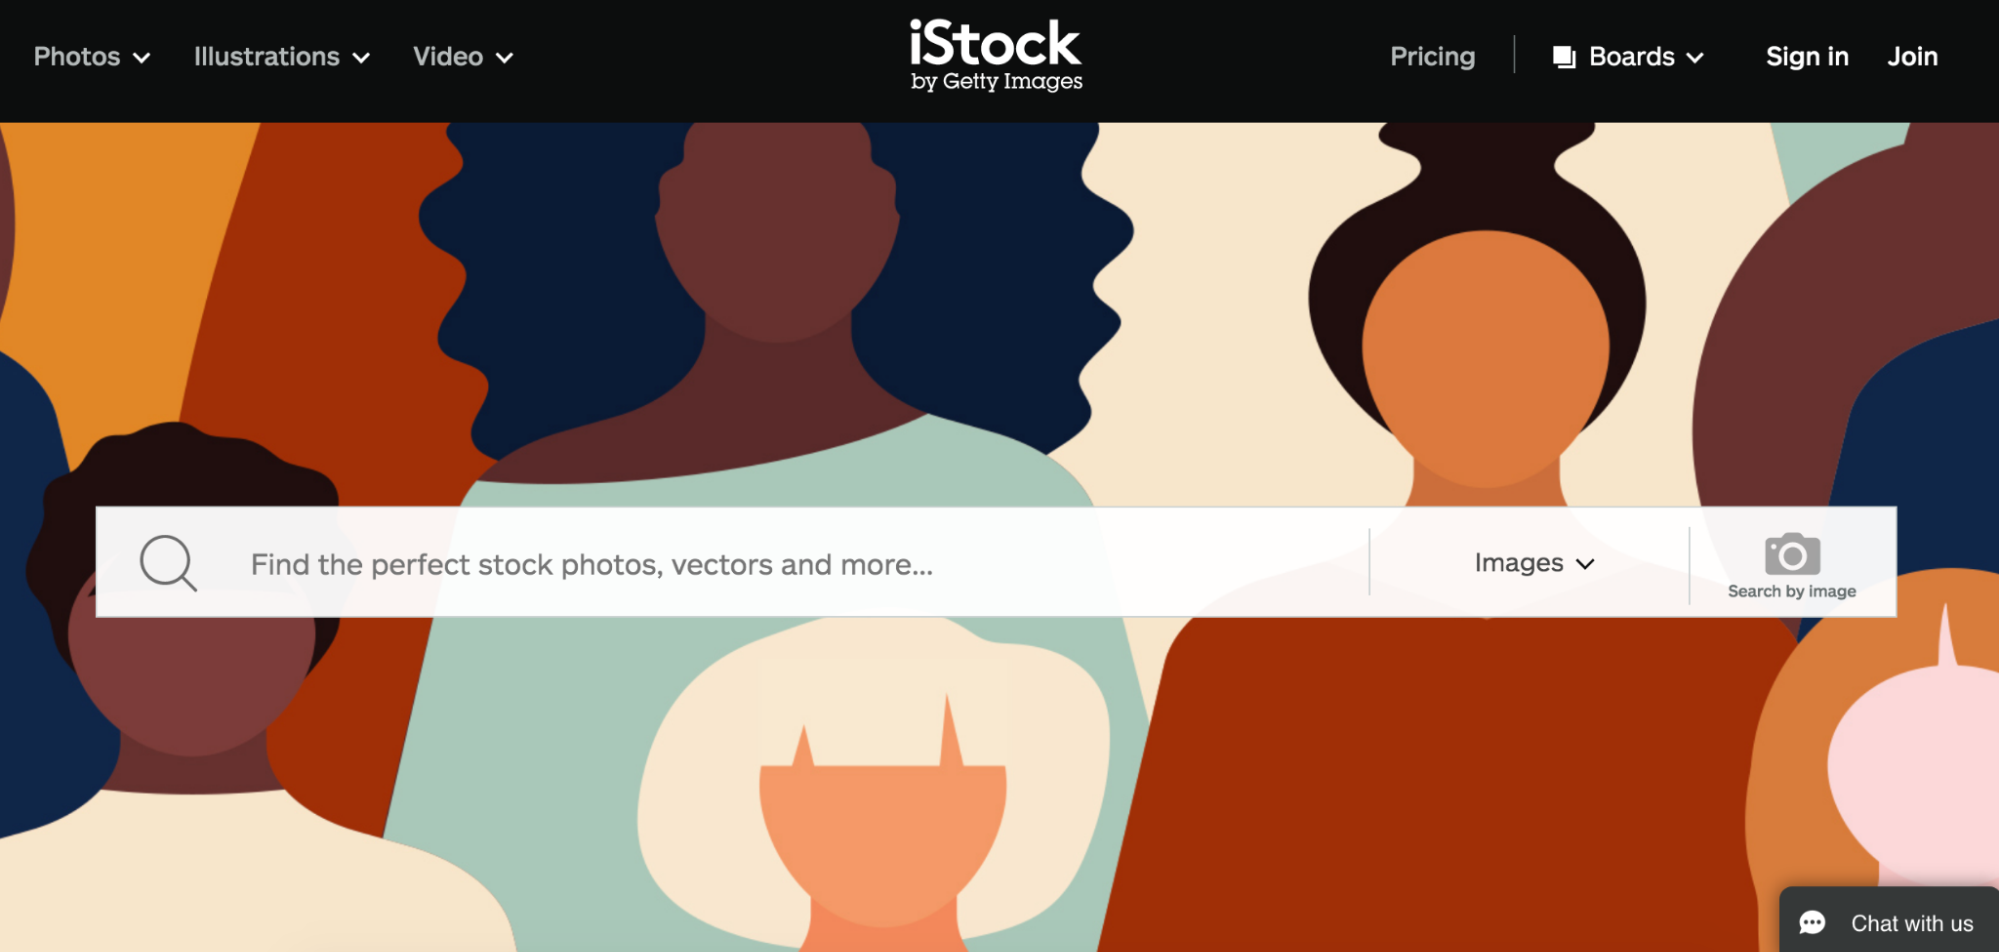 iStock free stock photo site homepage